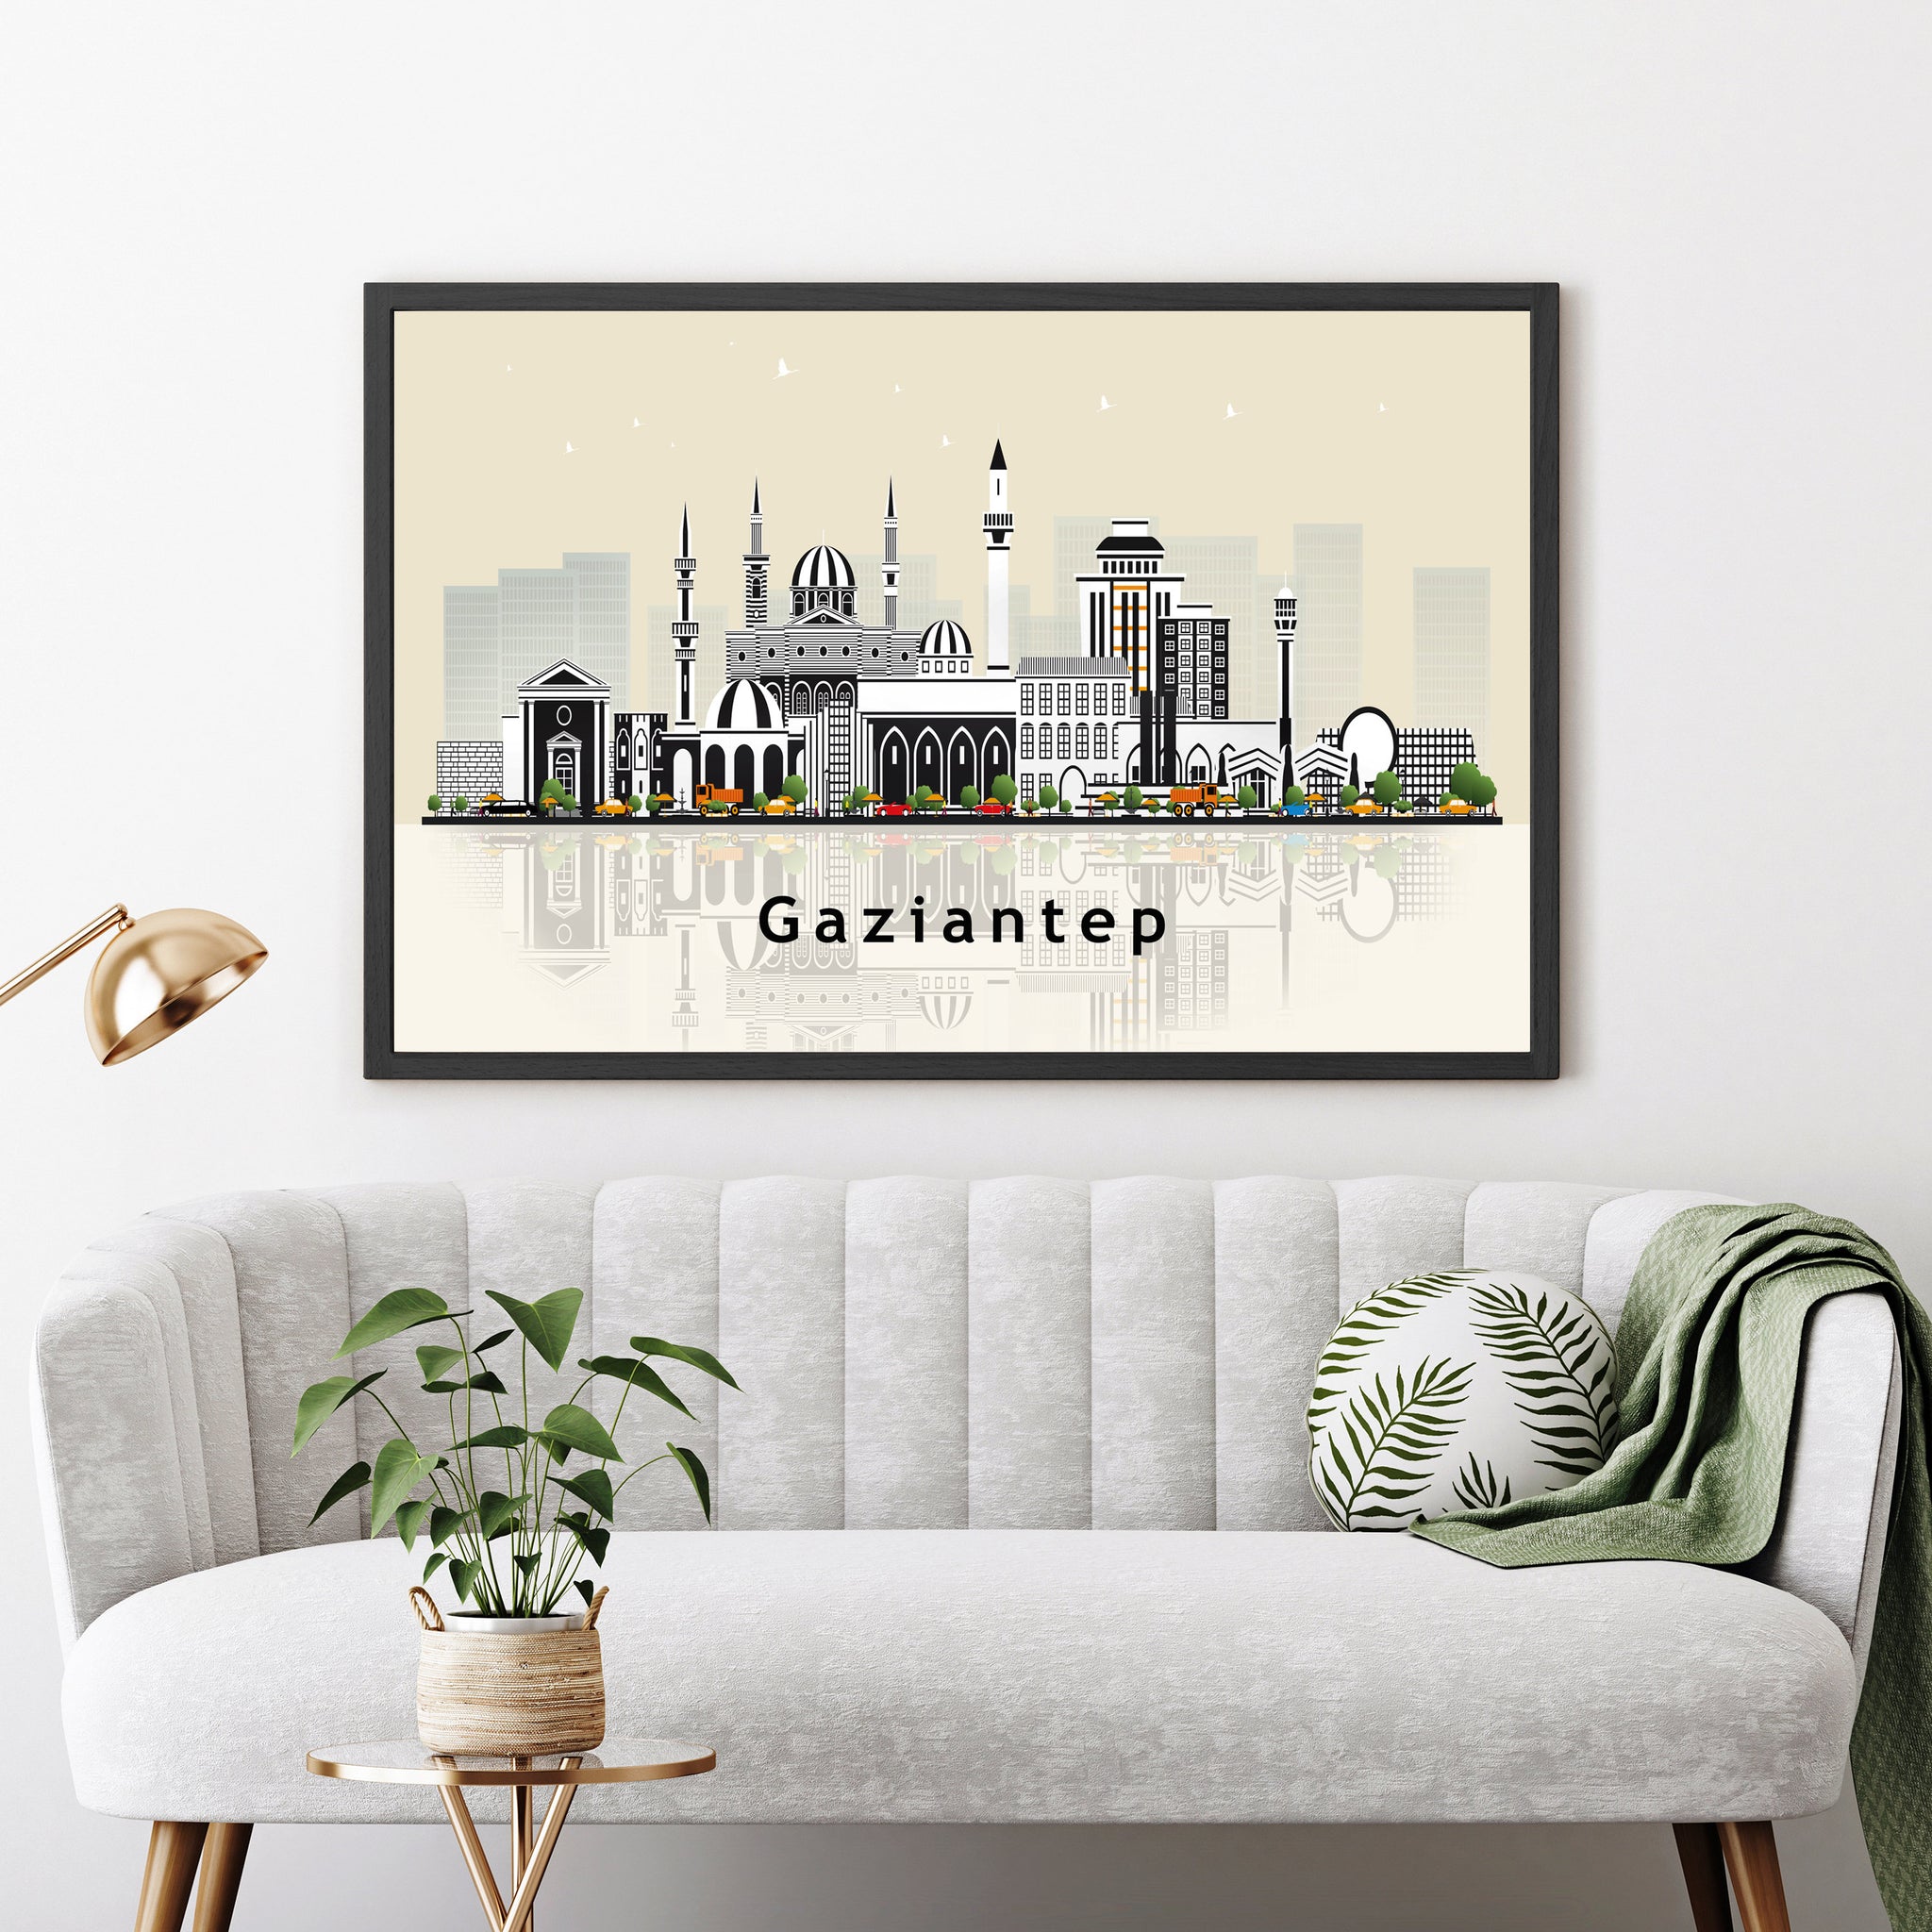 GAZIANTEP TURKEY Illustration skyline poster, Modern skyline cityscape poster print, Gaziantep landmark map poster, Home wall decoration